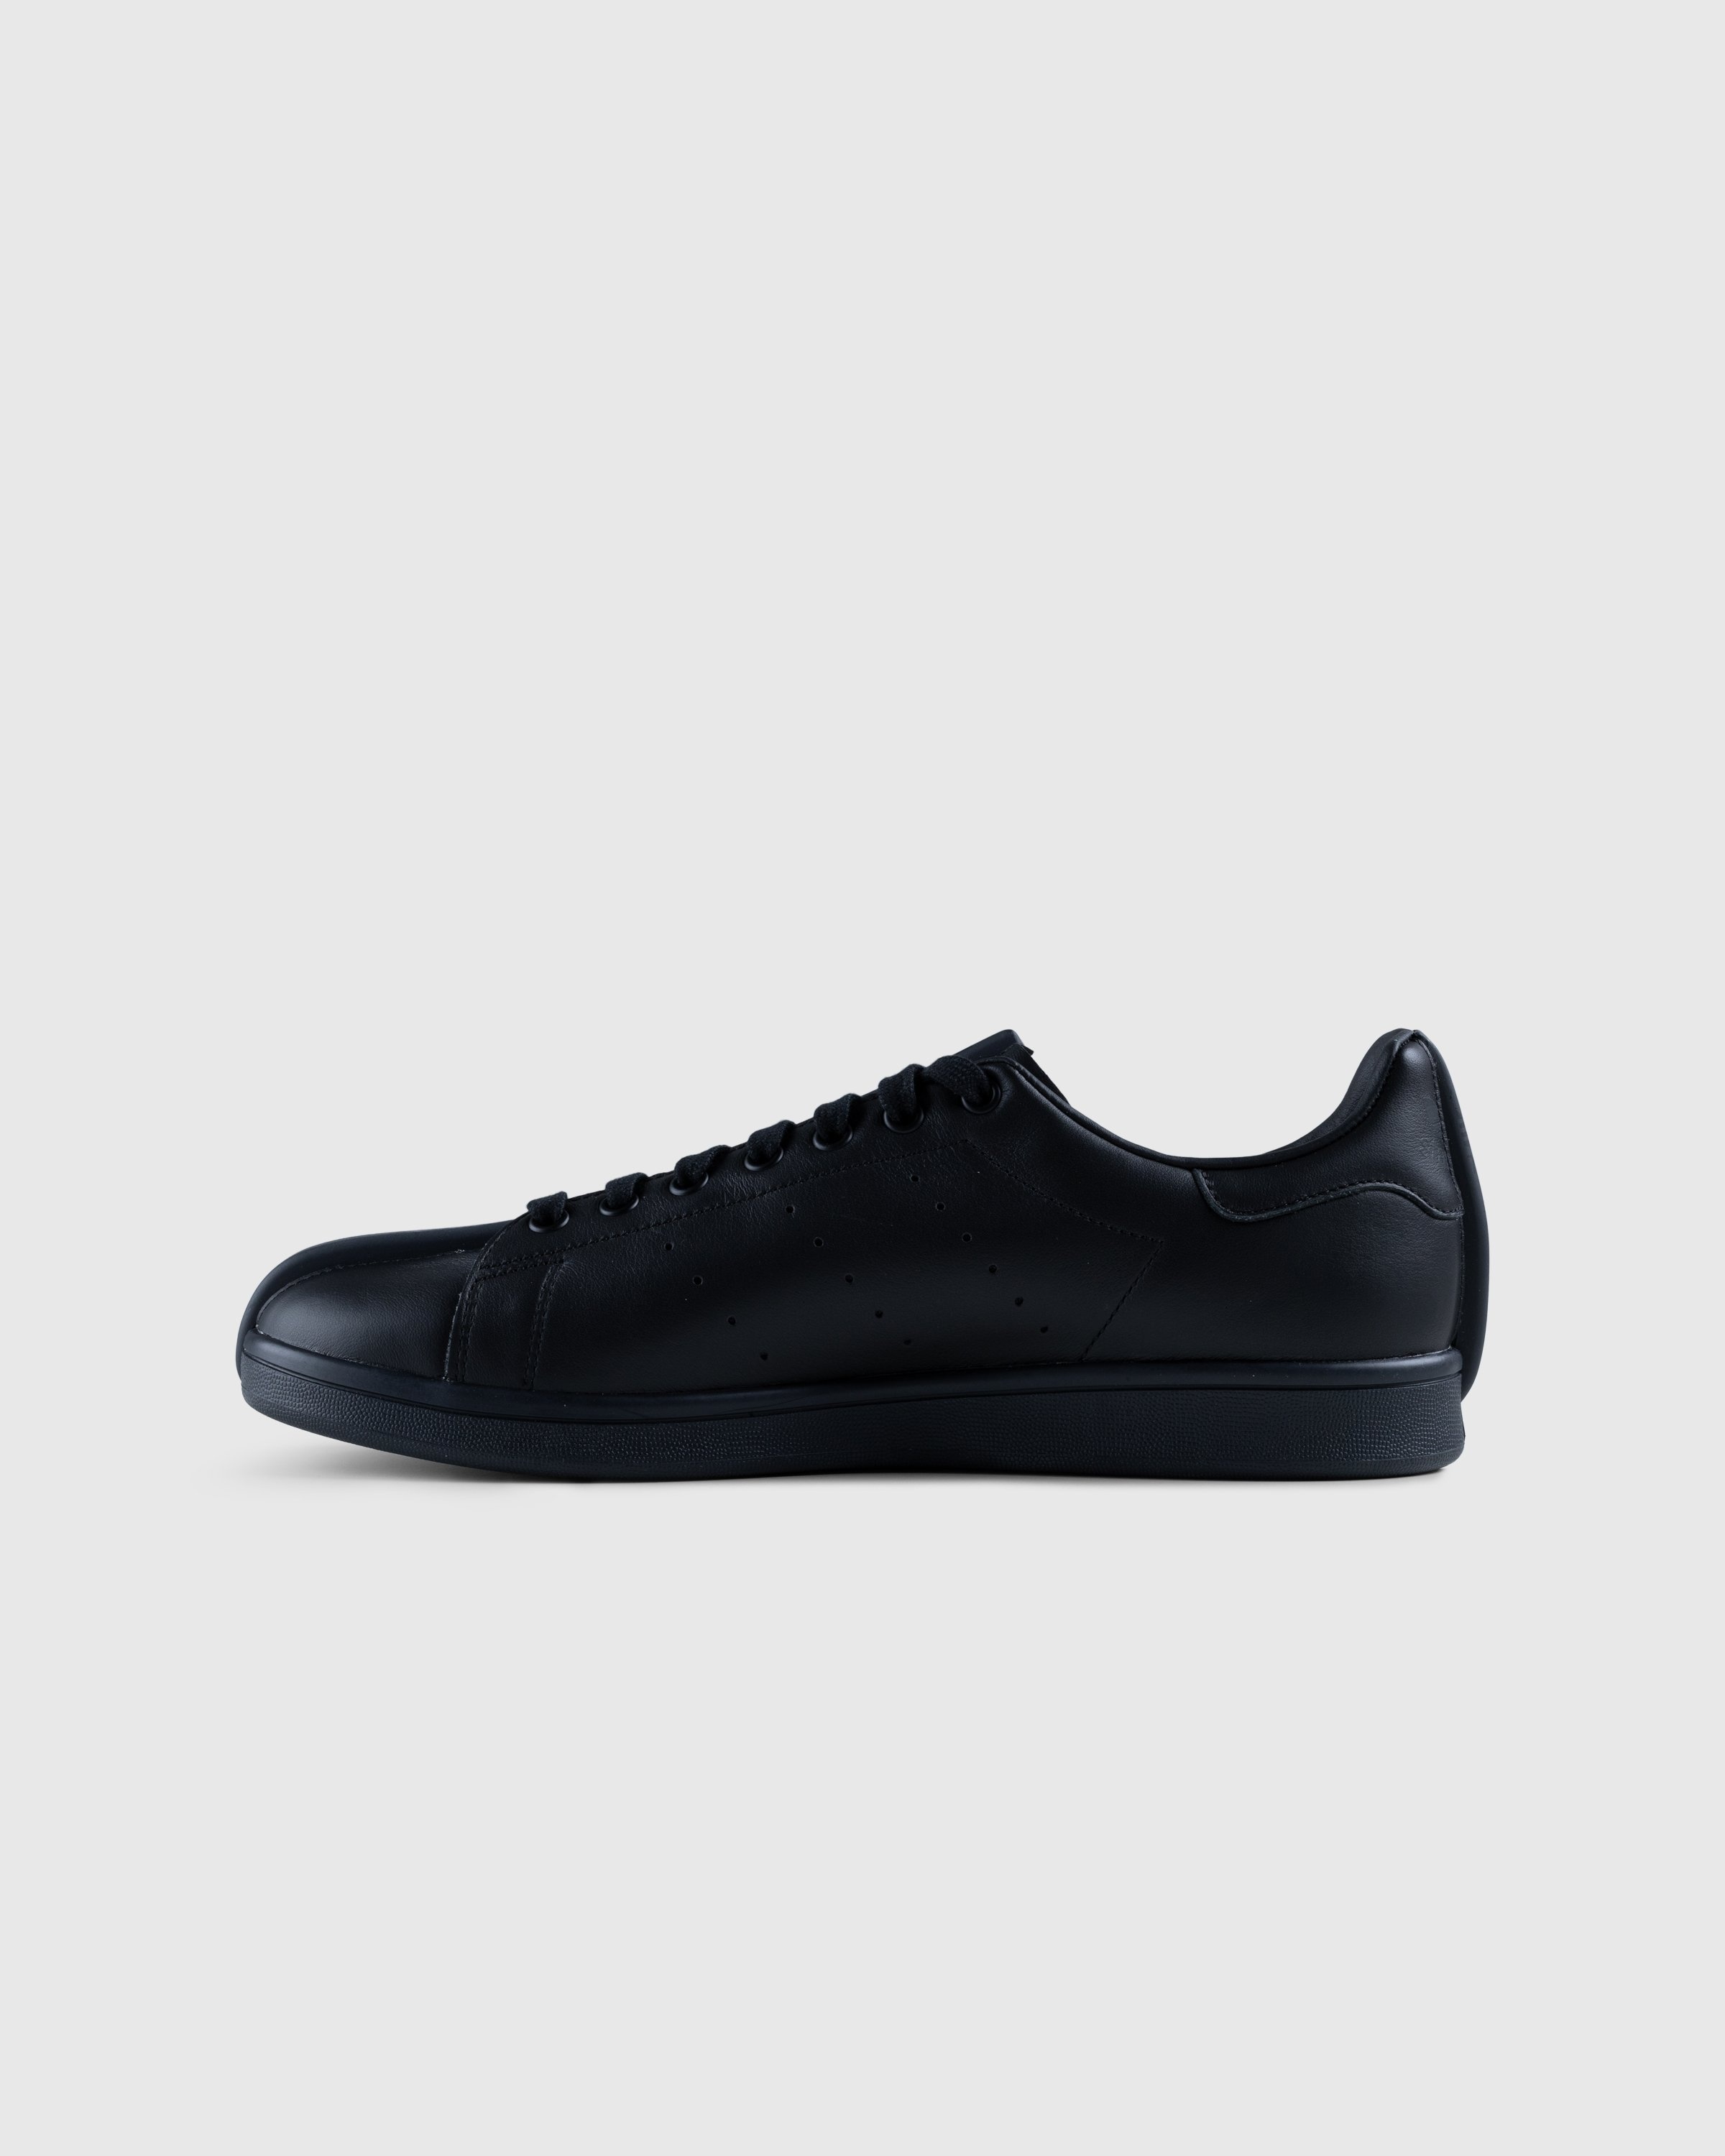 Adidas – CG Split Stan Smith Core Black/Granite - Sneakers - Black - Image 2